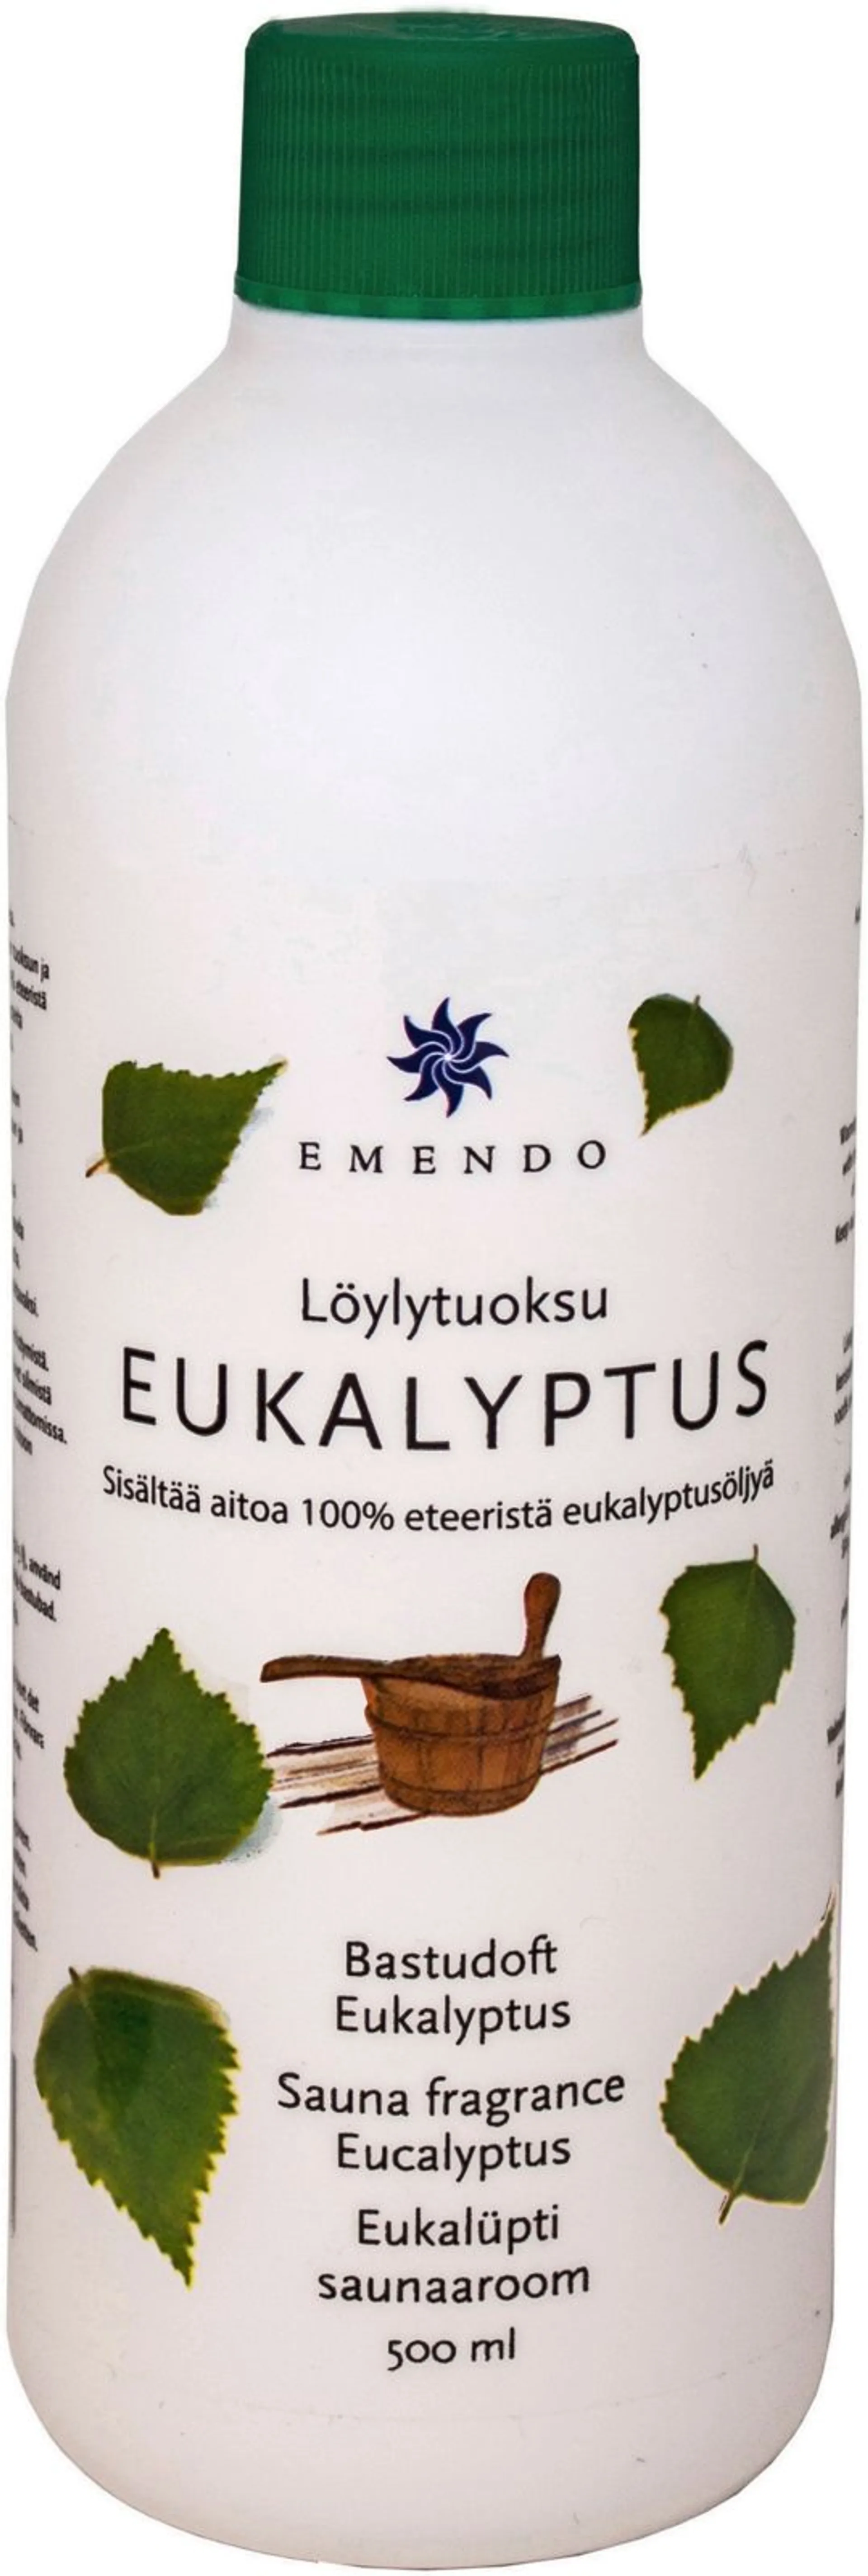 Emendo 500ml löylytuoksu eukalyptus